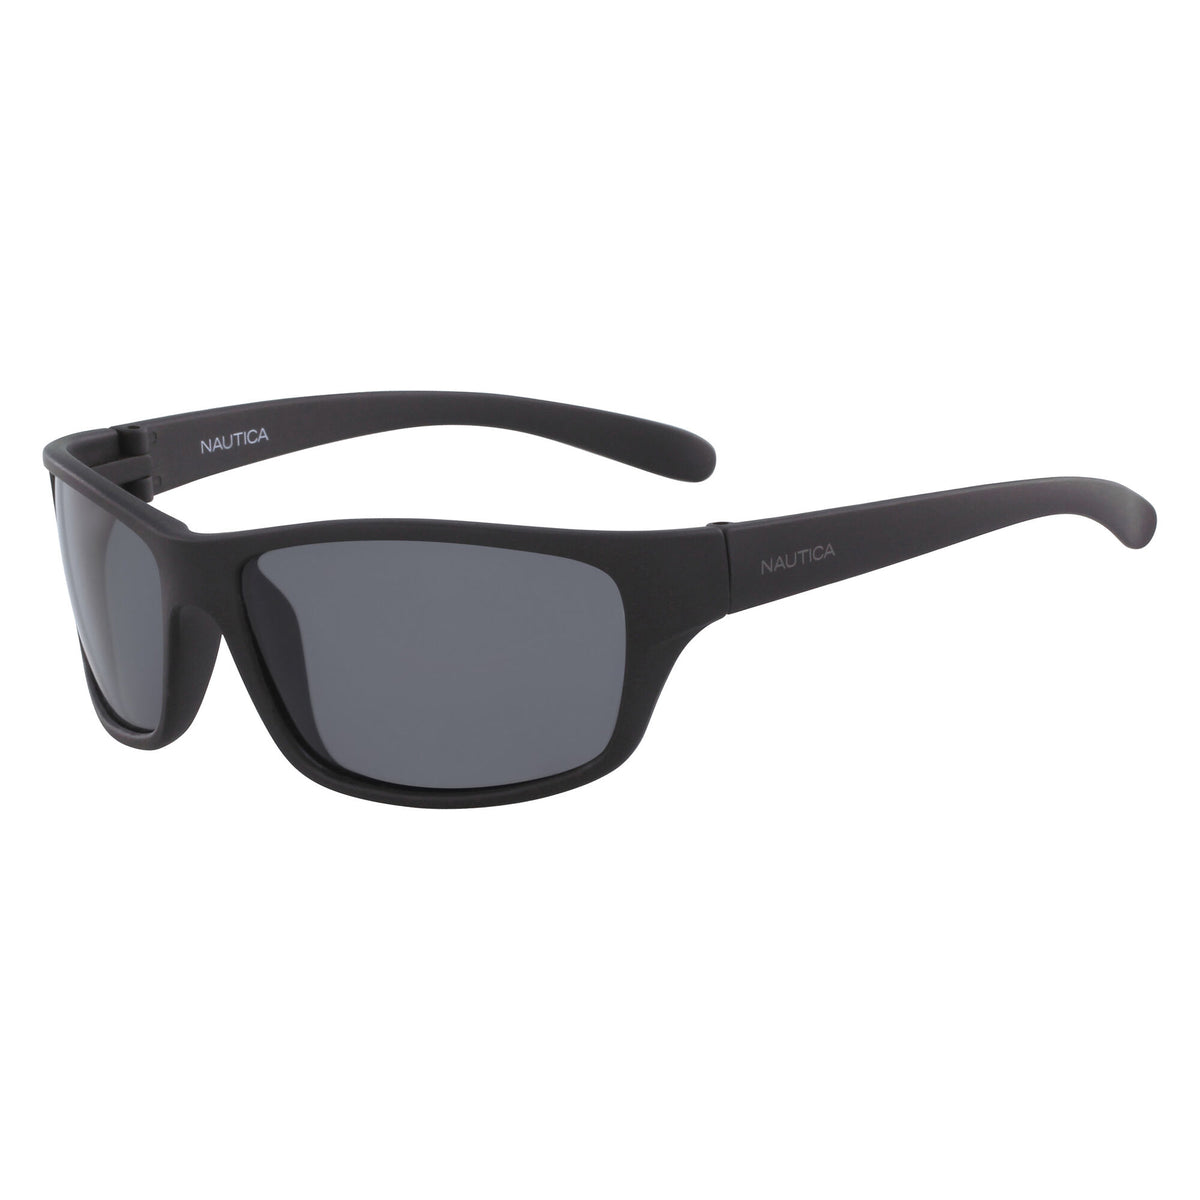 Nautica Men's Oversized Sunglasses With Matte Frame Black Onyx